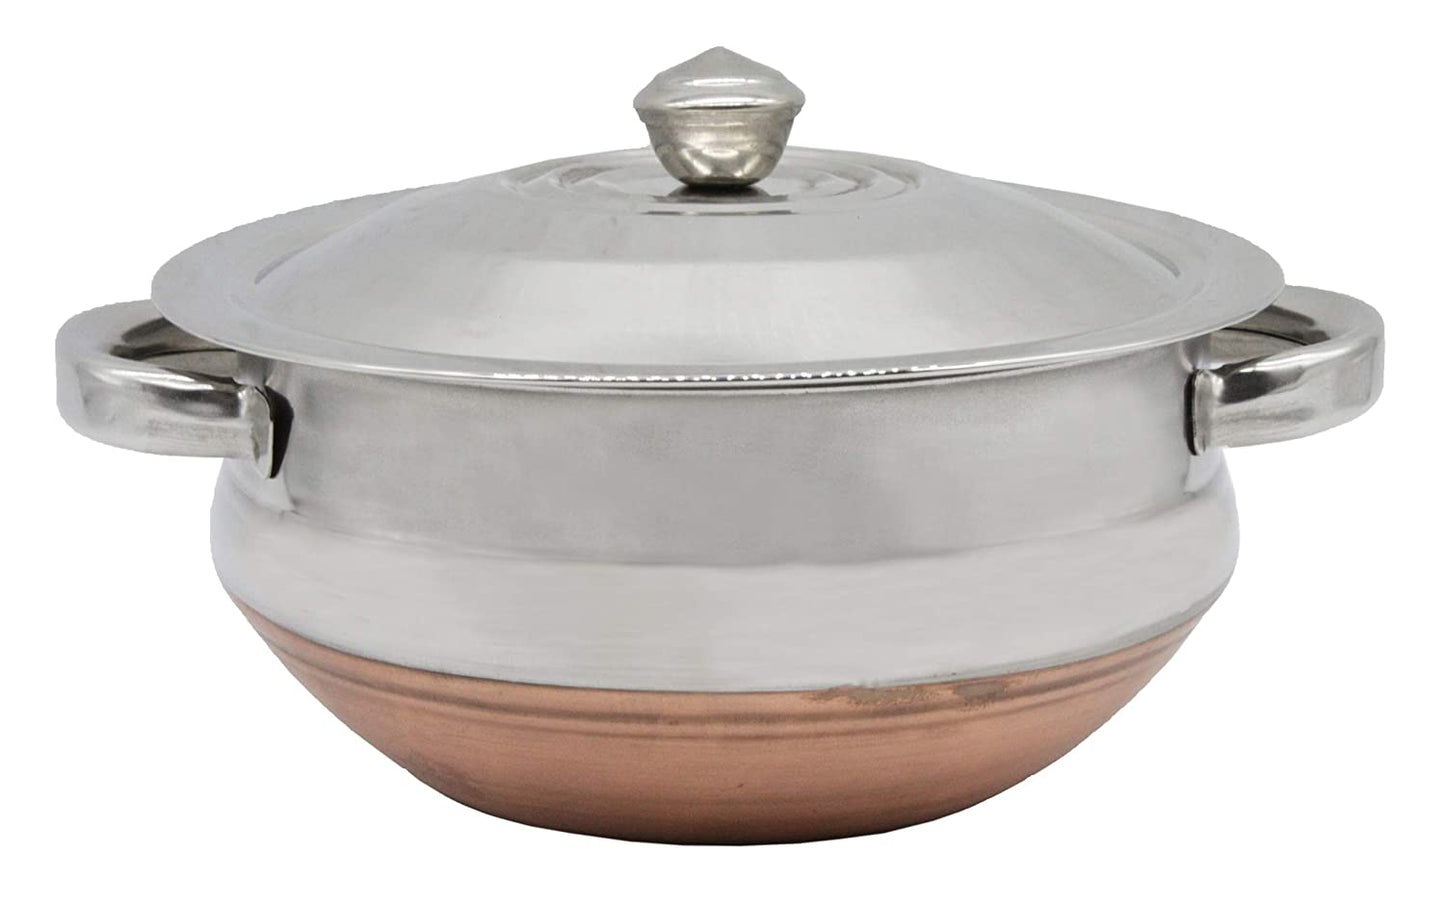 Stainless Steel Copper Bottom Dish 3 Pcs Set (14cm, 16cm, 18cm)